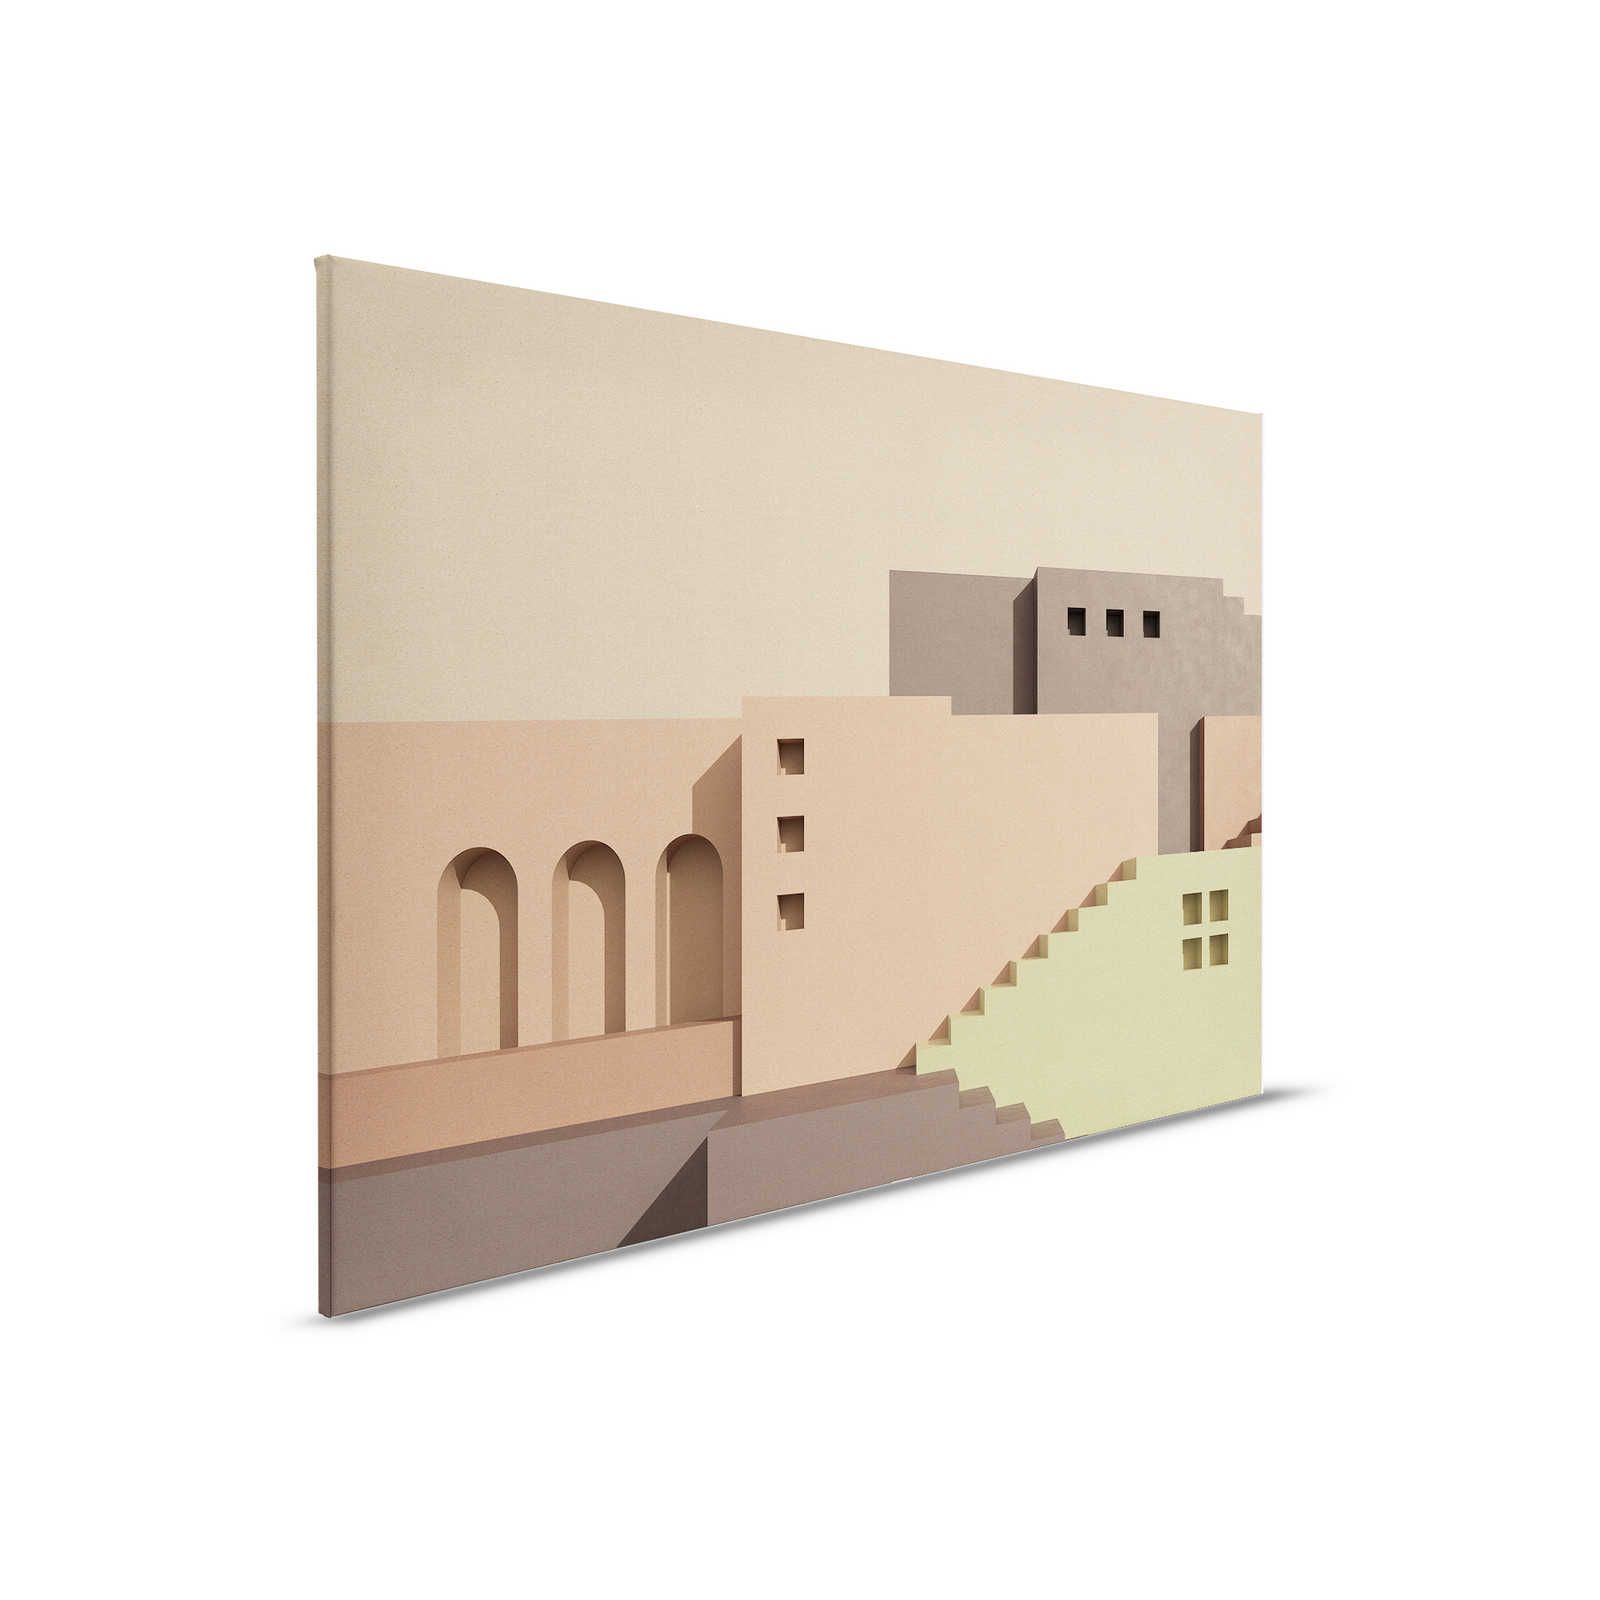         Tanger 2 - Leinwandbild Architektur Dessert Design abstrakt – 0,90 m x 0,60 m
    